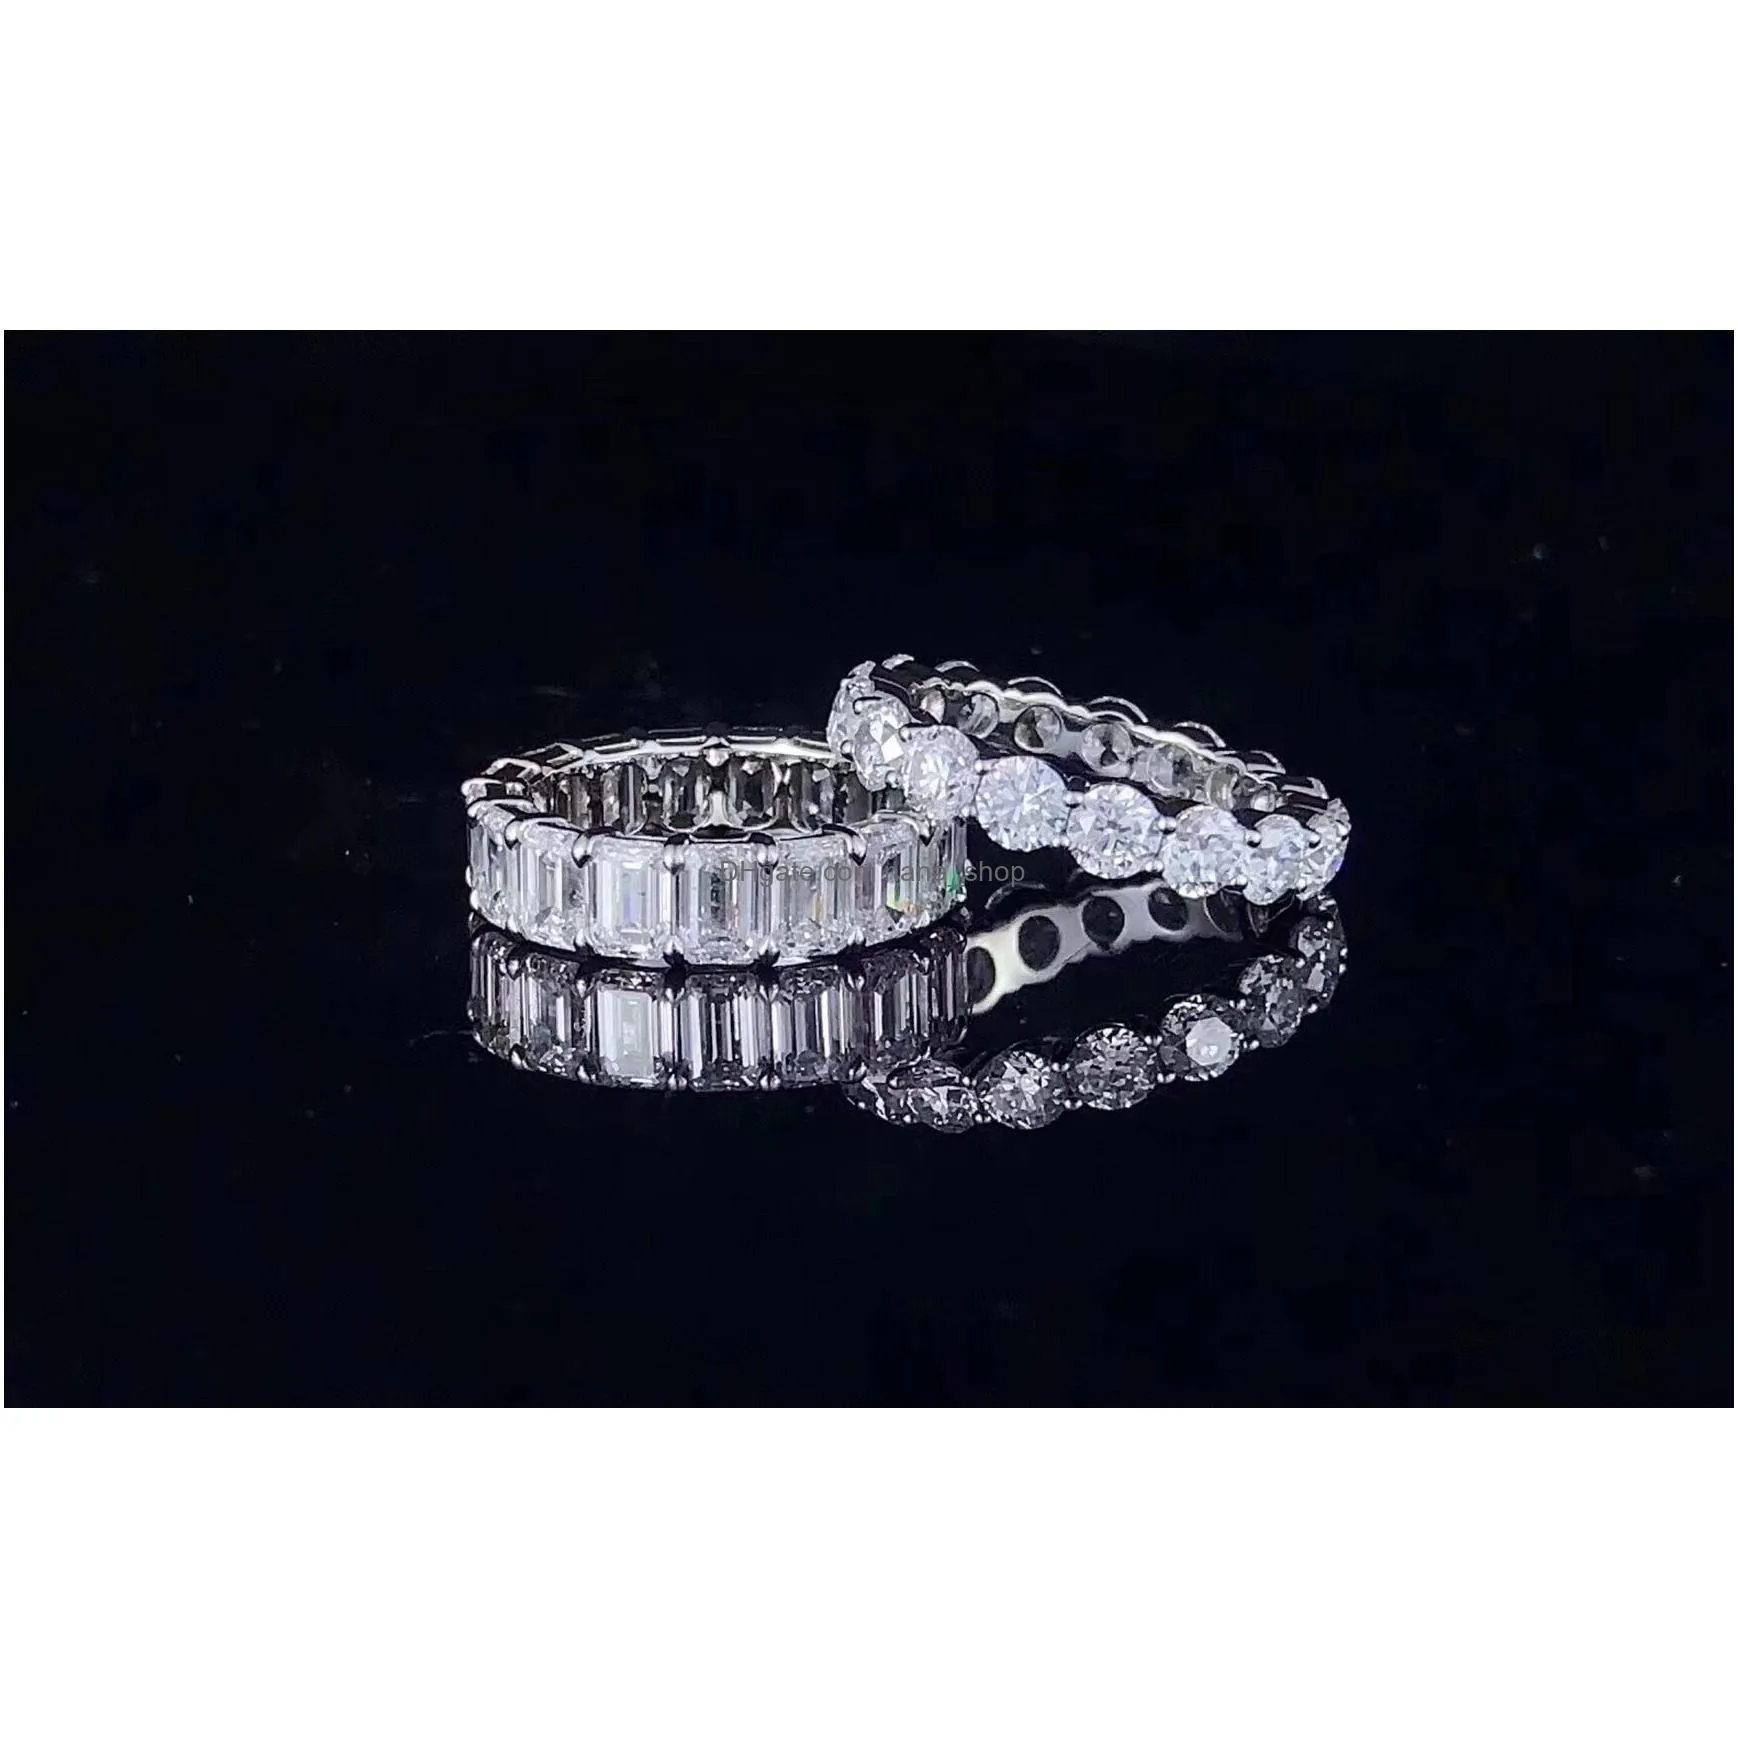 Wedding Rings Choucong Vintage Fashion Jewelry Real 925 Sterling Sier Princess White Topaz Cz Diamond Eternity Women Wedding Engageme Dhhd1